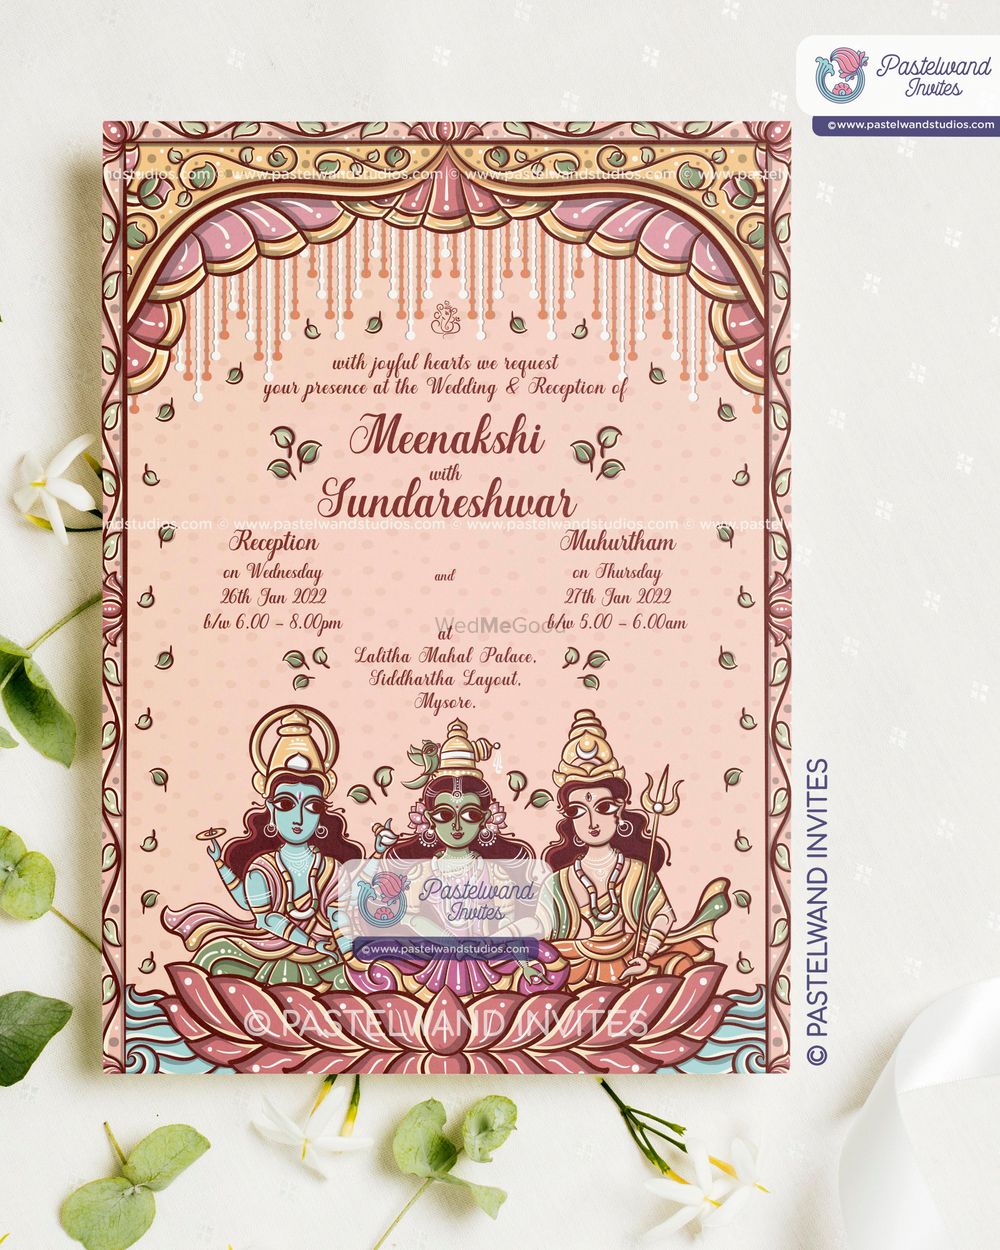 Photo From The Madurai Wedding - Bengal Pattachitra Style Wedding Invitation - By Pastelwand Invites